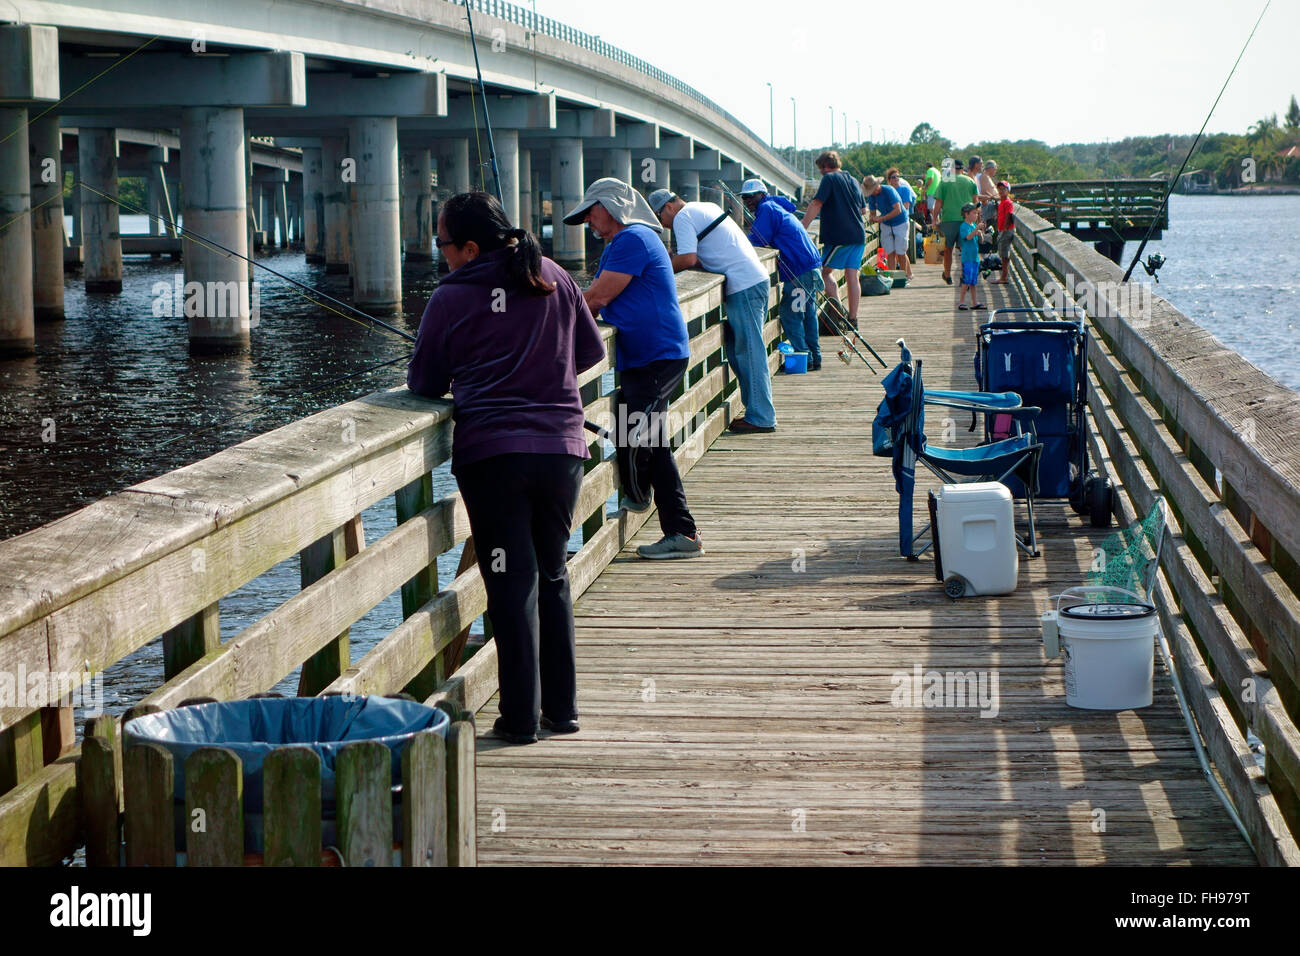 The El Jobean fishing pier in Port Charlotte, Florida, USA Stock Photo